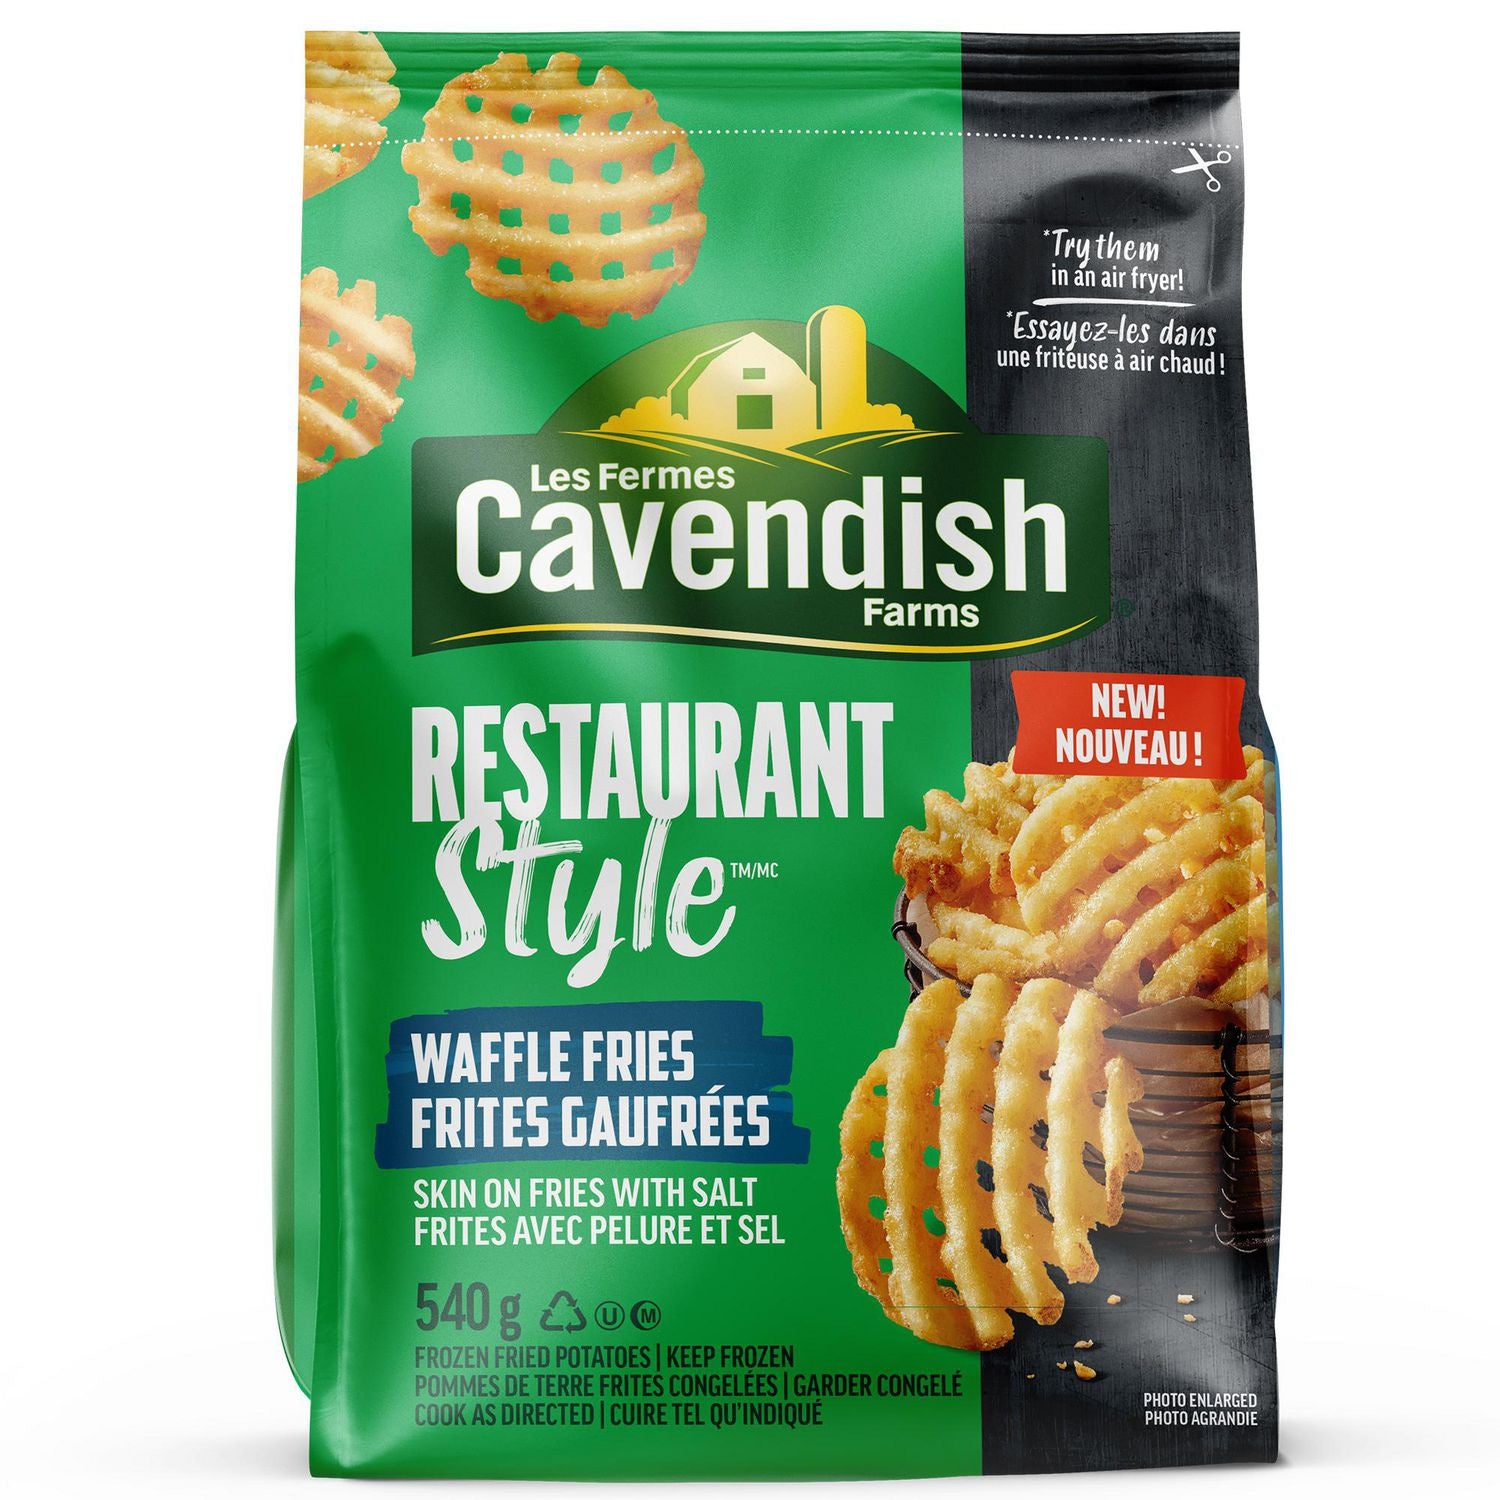 Cavendish Farms Restaurant Style, Waffle Fries, 540 g